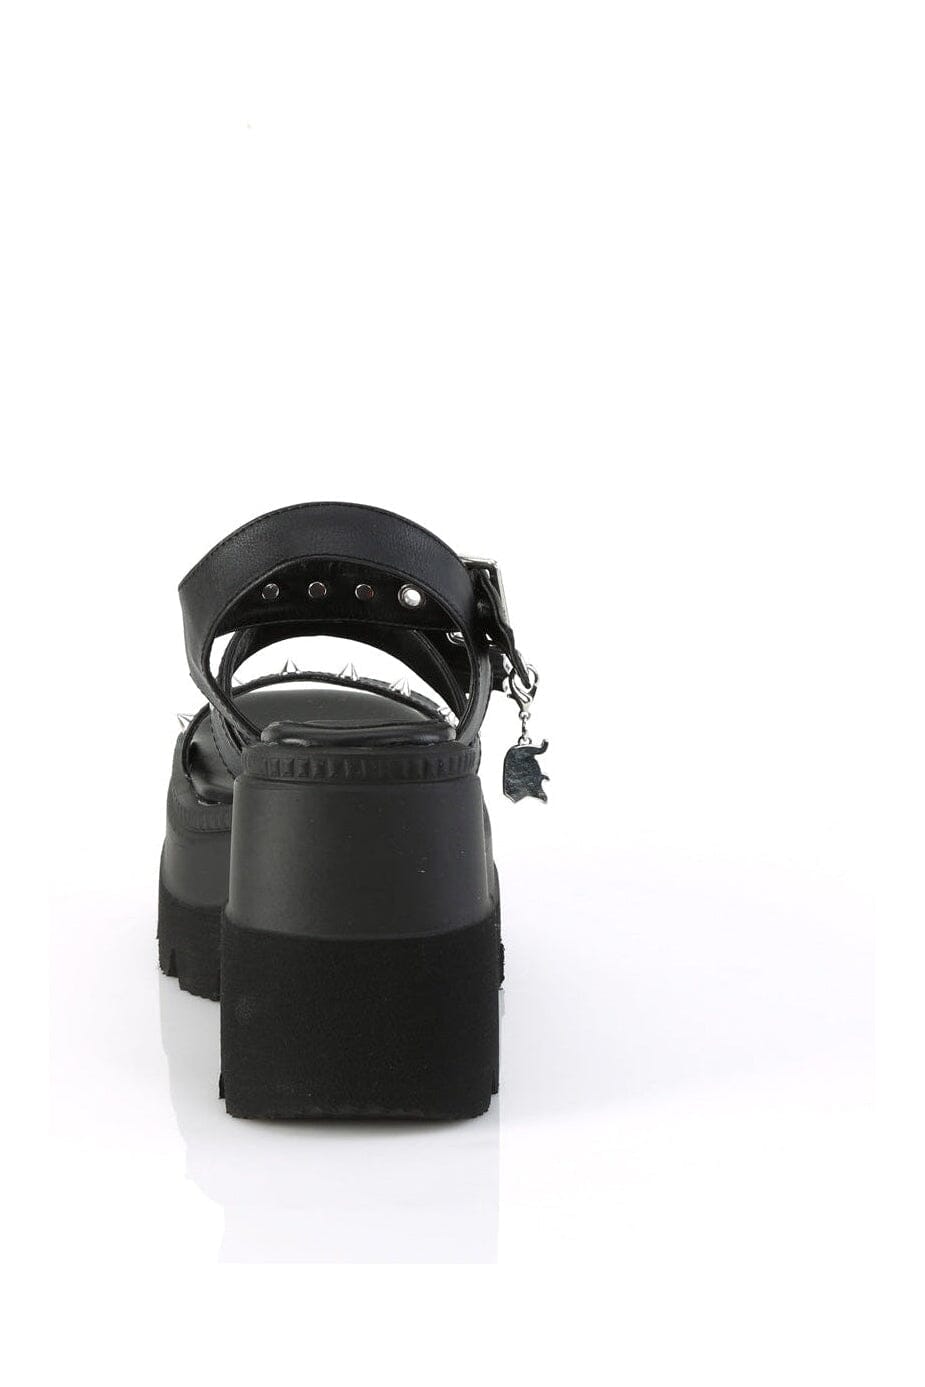 SHAKER-13 Black Vegan Leather Sandal-Sandals-Demonia-SEXYSHOES.COM